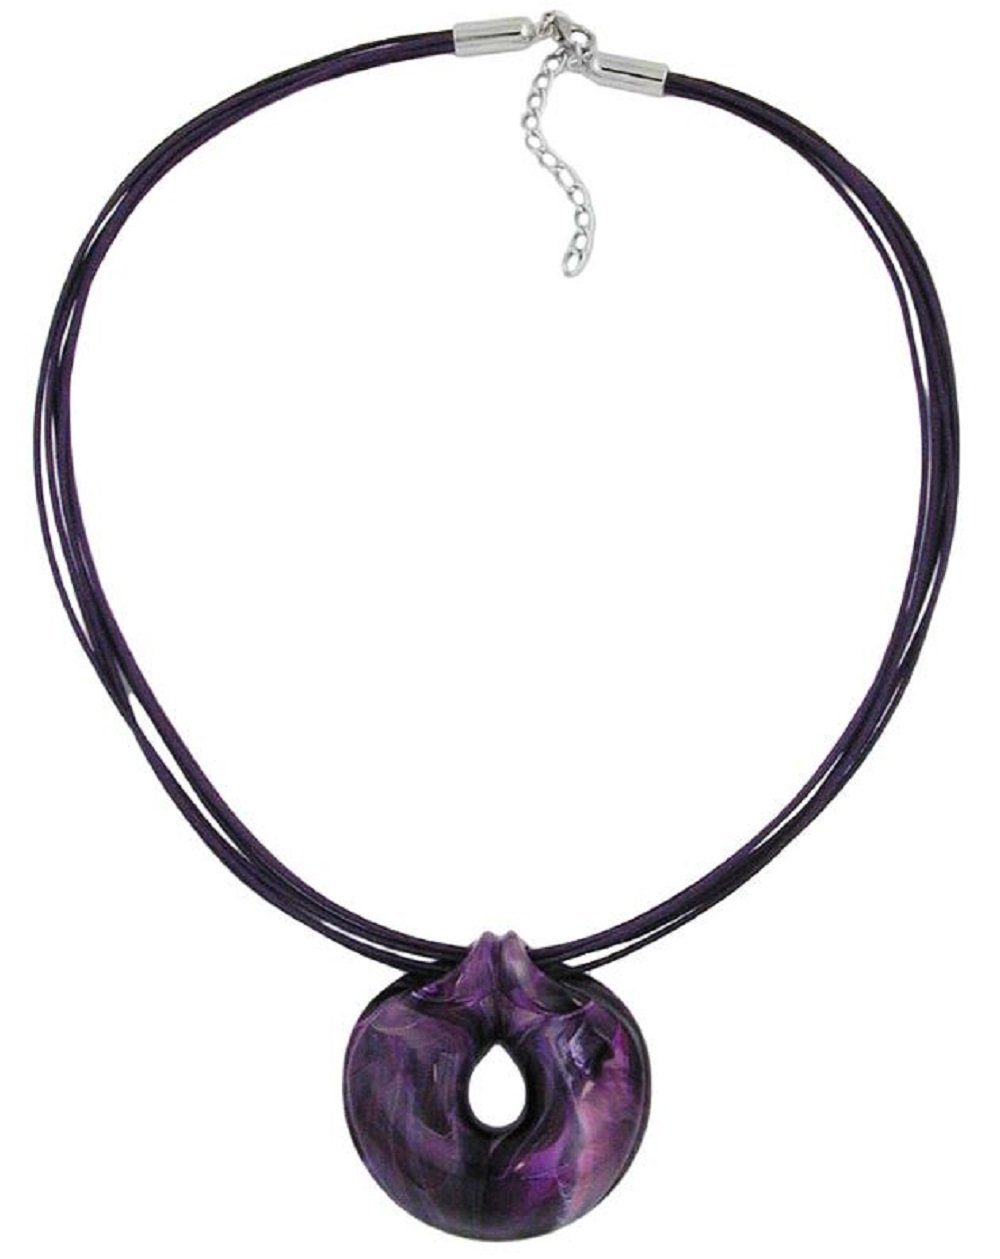 unbespielt Collier Kette Kunststoff Anhänger Amulett lila marmoriert Kordel lila 55 cm, Modeschmuck für Damen